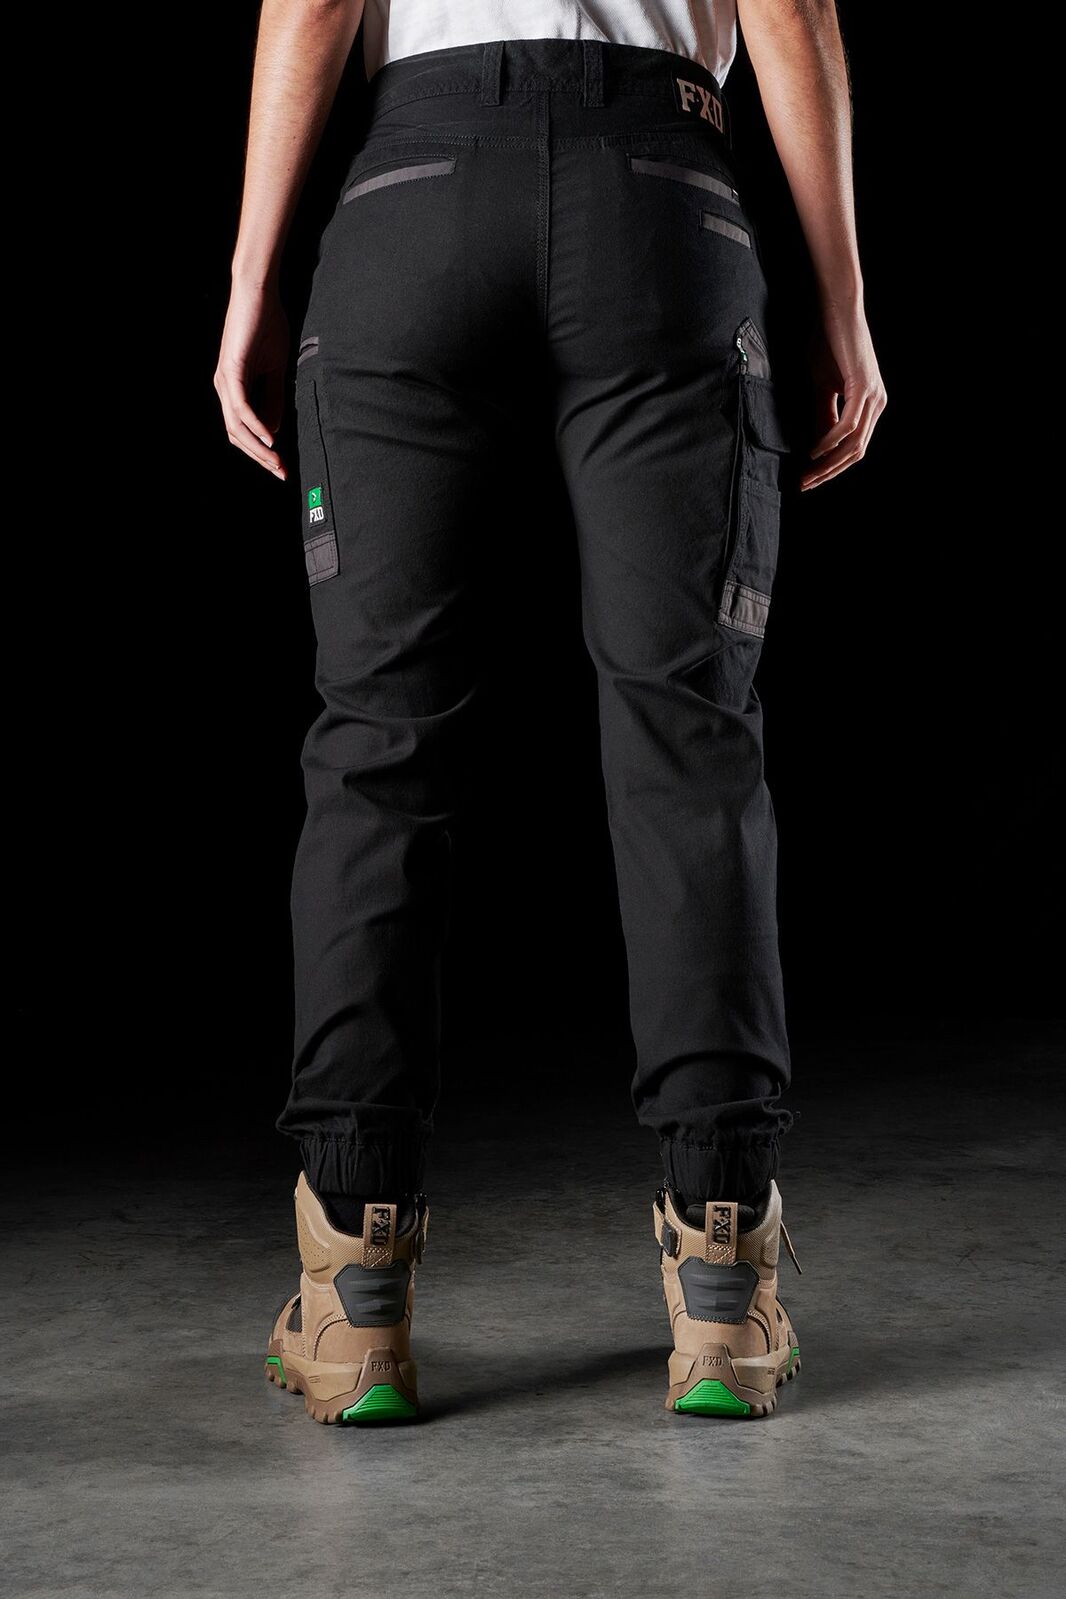 FXD WP-4W Women's Stretch Cuffed Work Pants